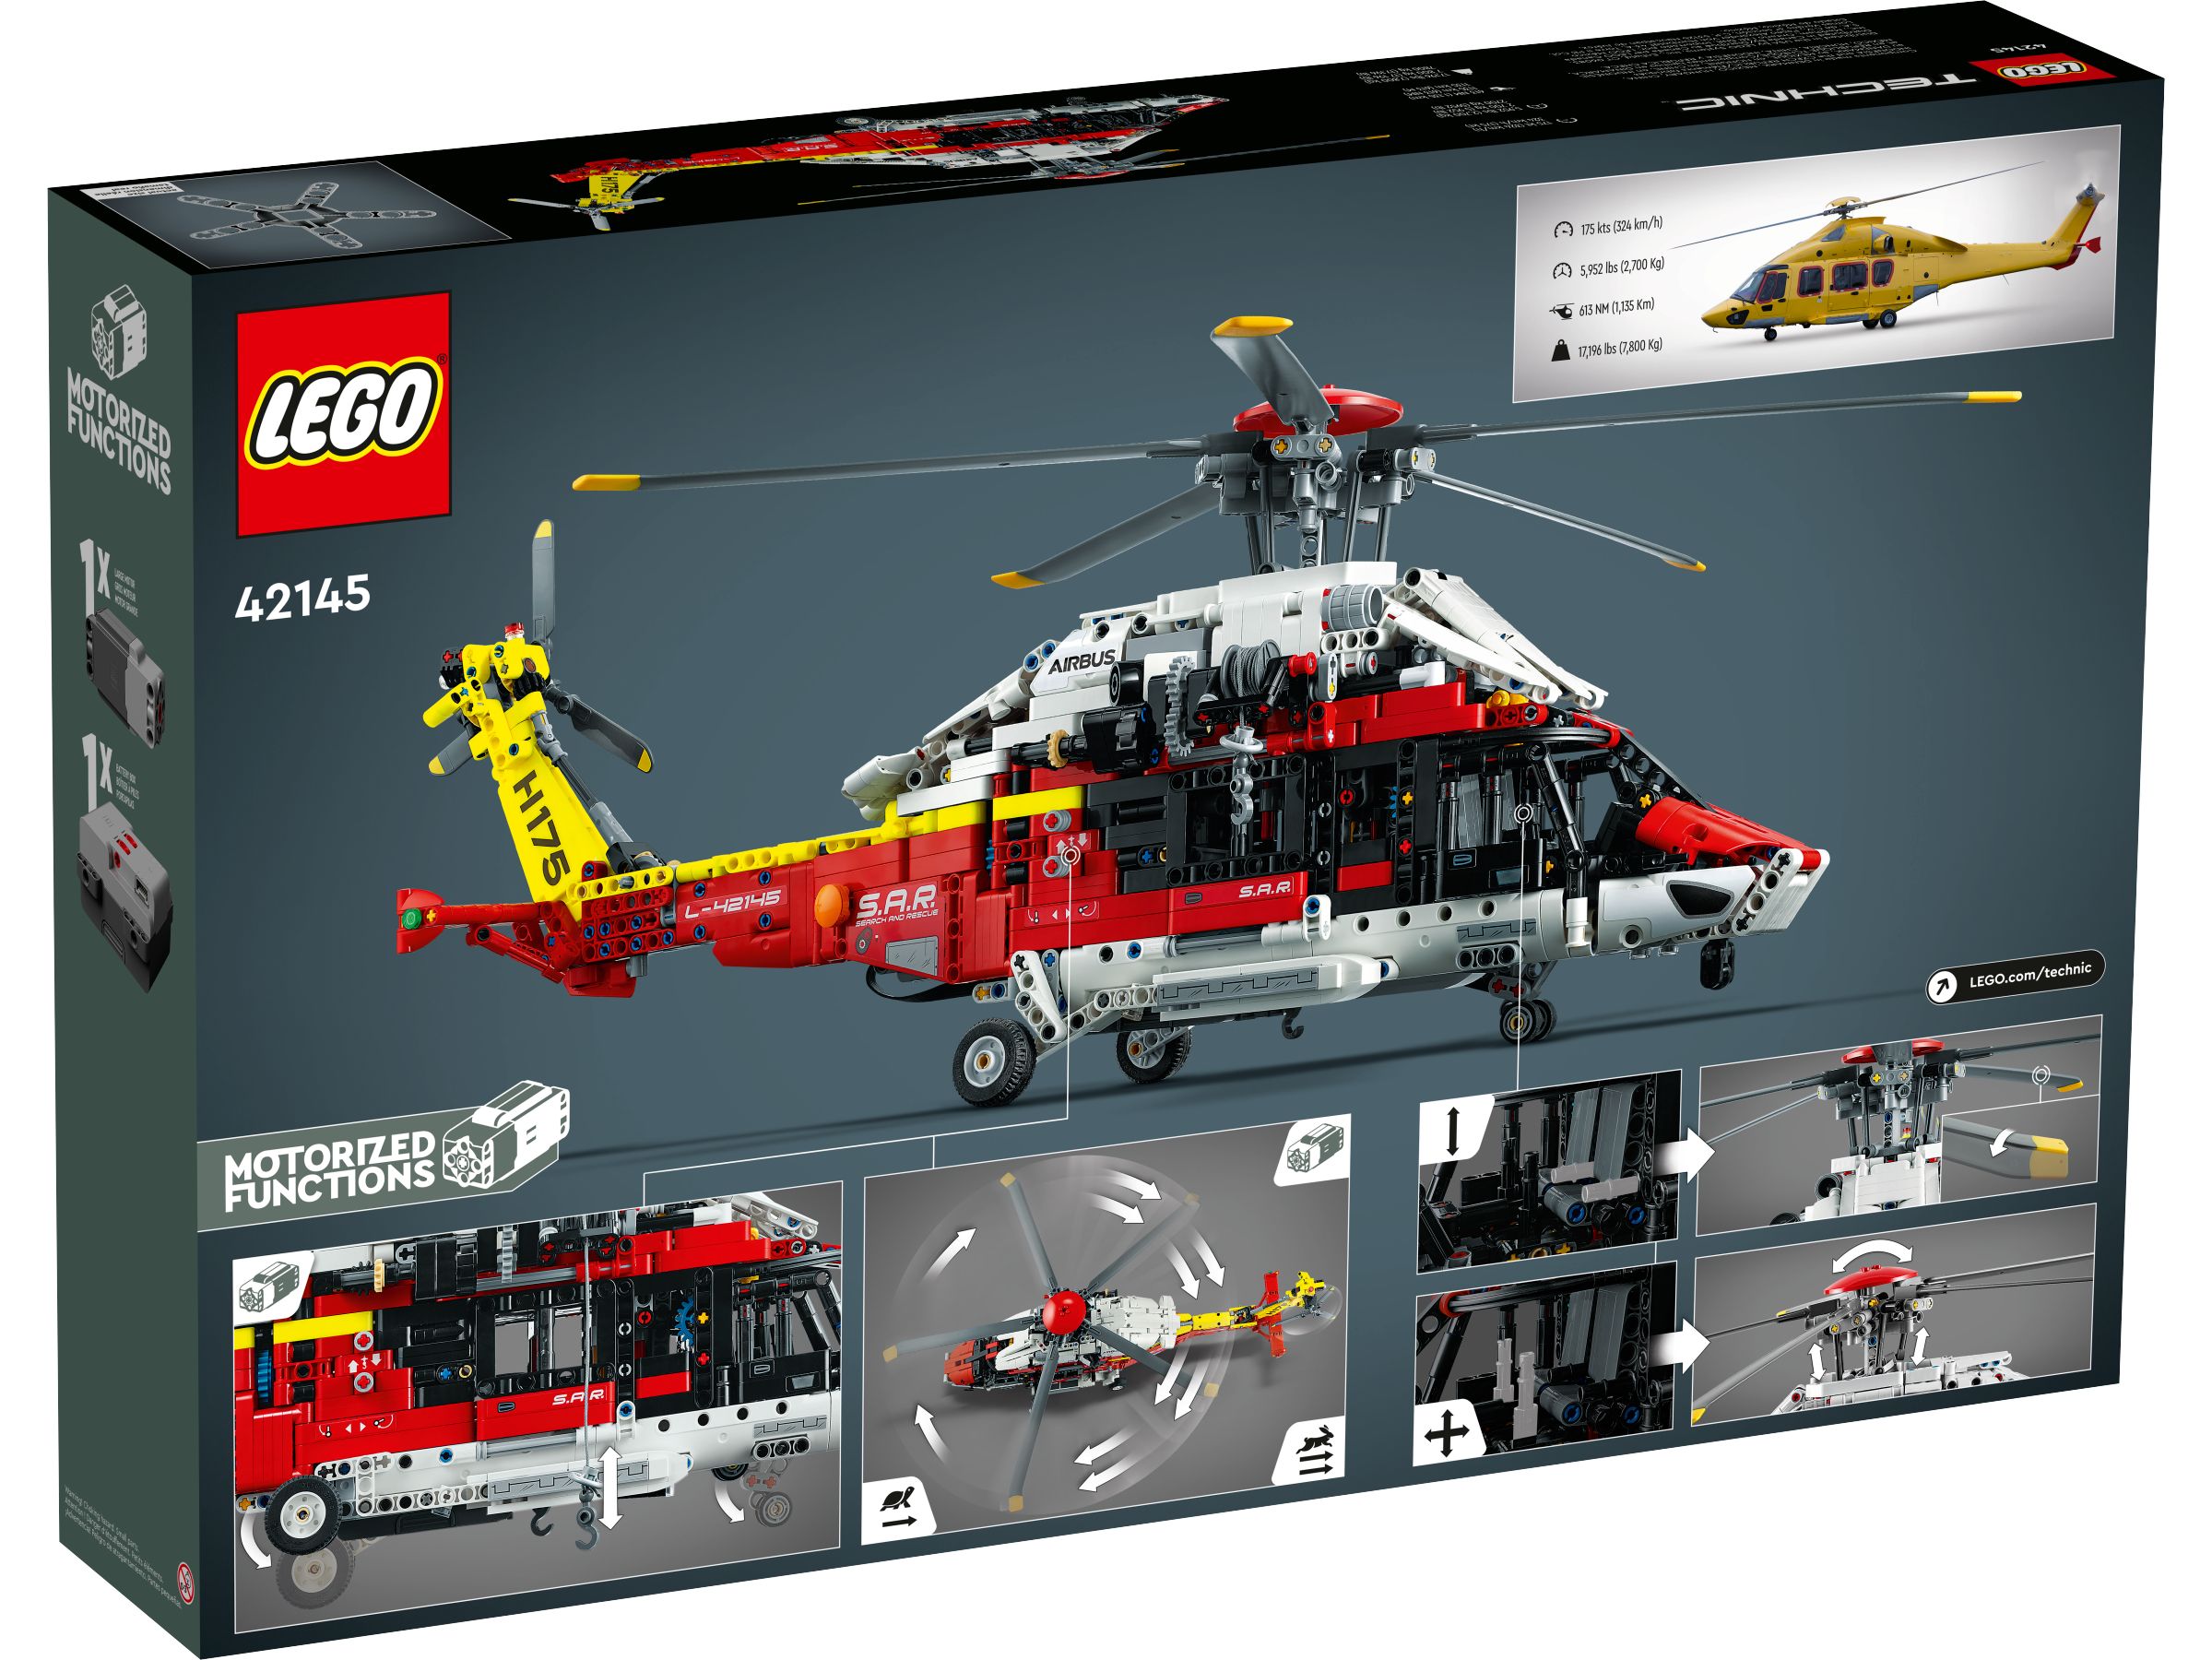 LEGO Technic 42145 Airbus H175 Rettungshubschrauber LEGO_42145_alt7.jpg